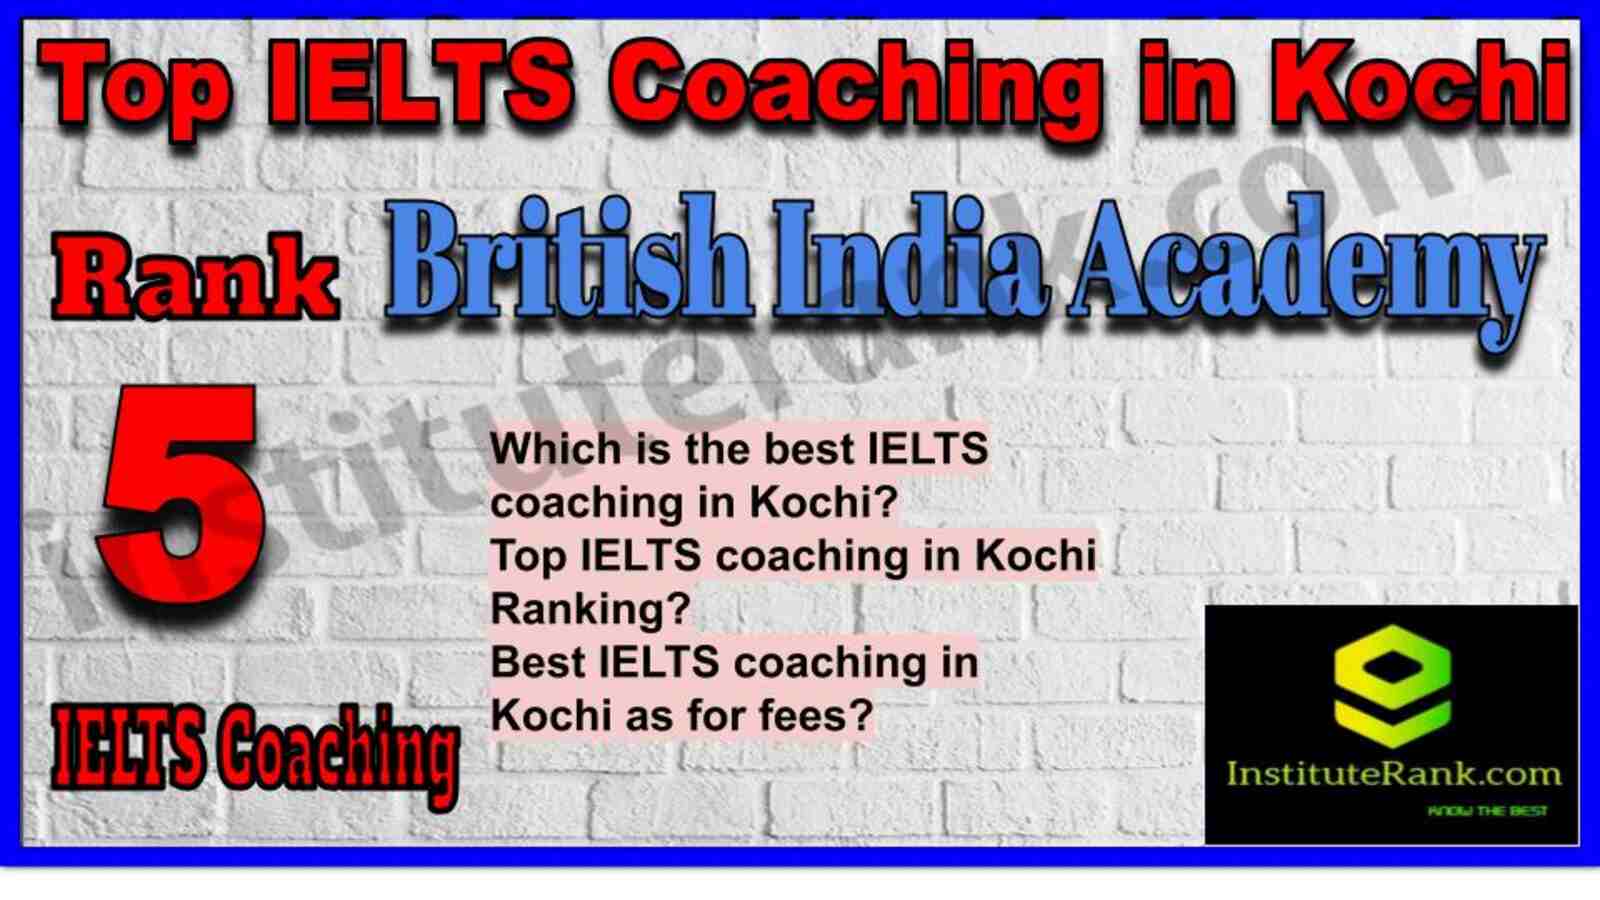 Rank 5. British India Academy | Best IELTS Coaching in Kochi